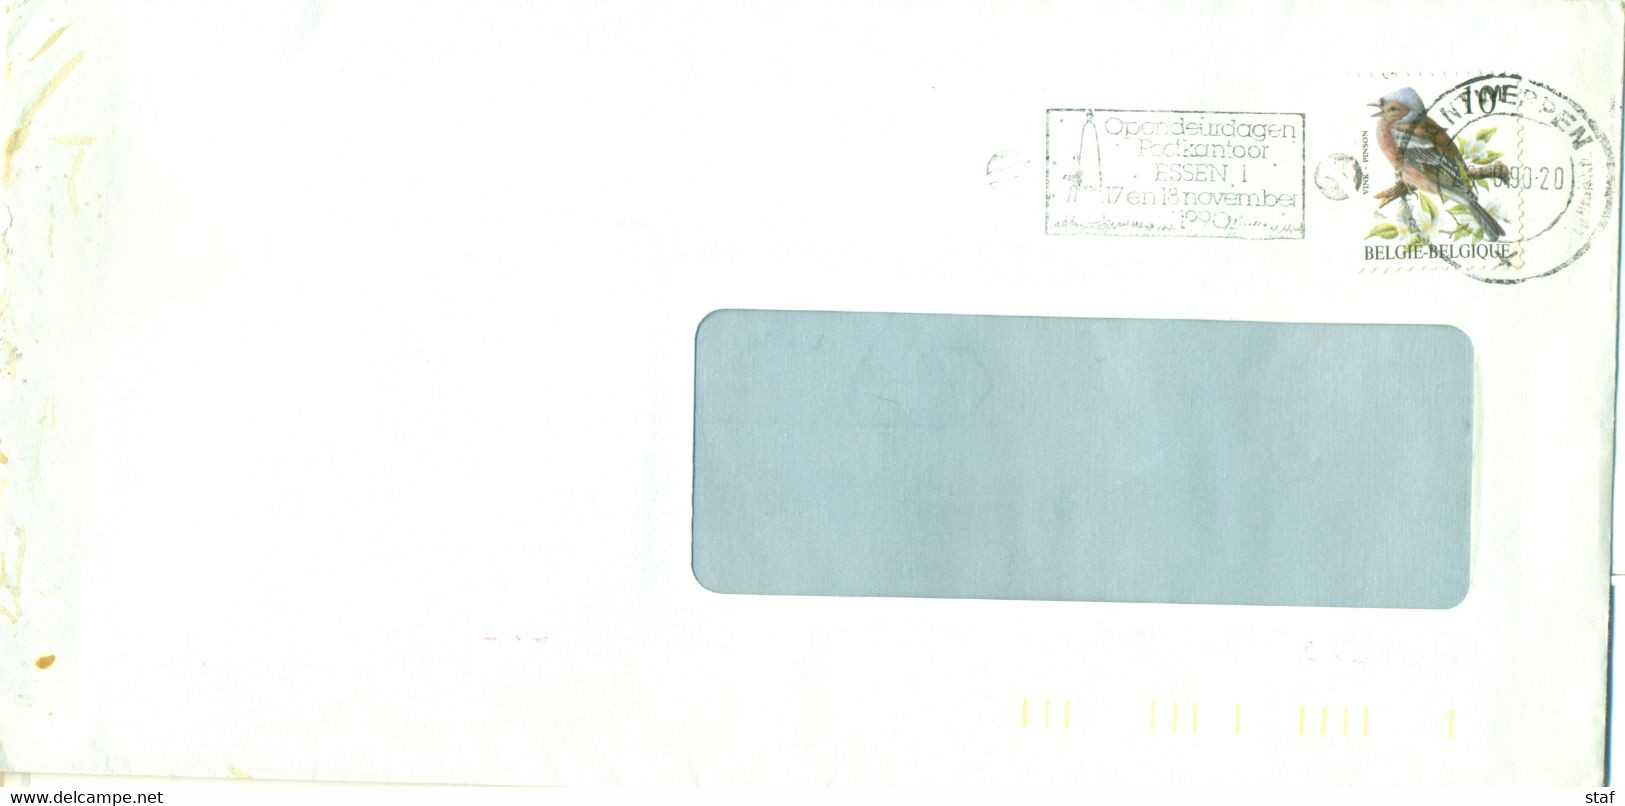 Opendeurdagen Postkantoor Essen 1 17 En 18 November 1990 - Targhette